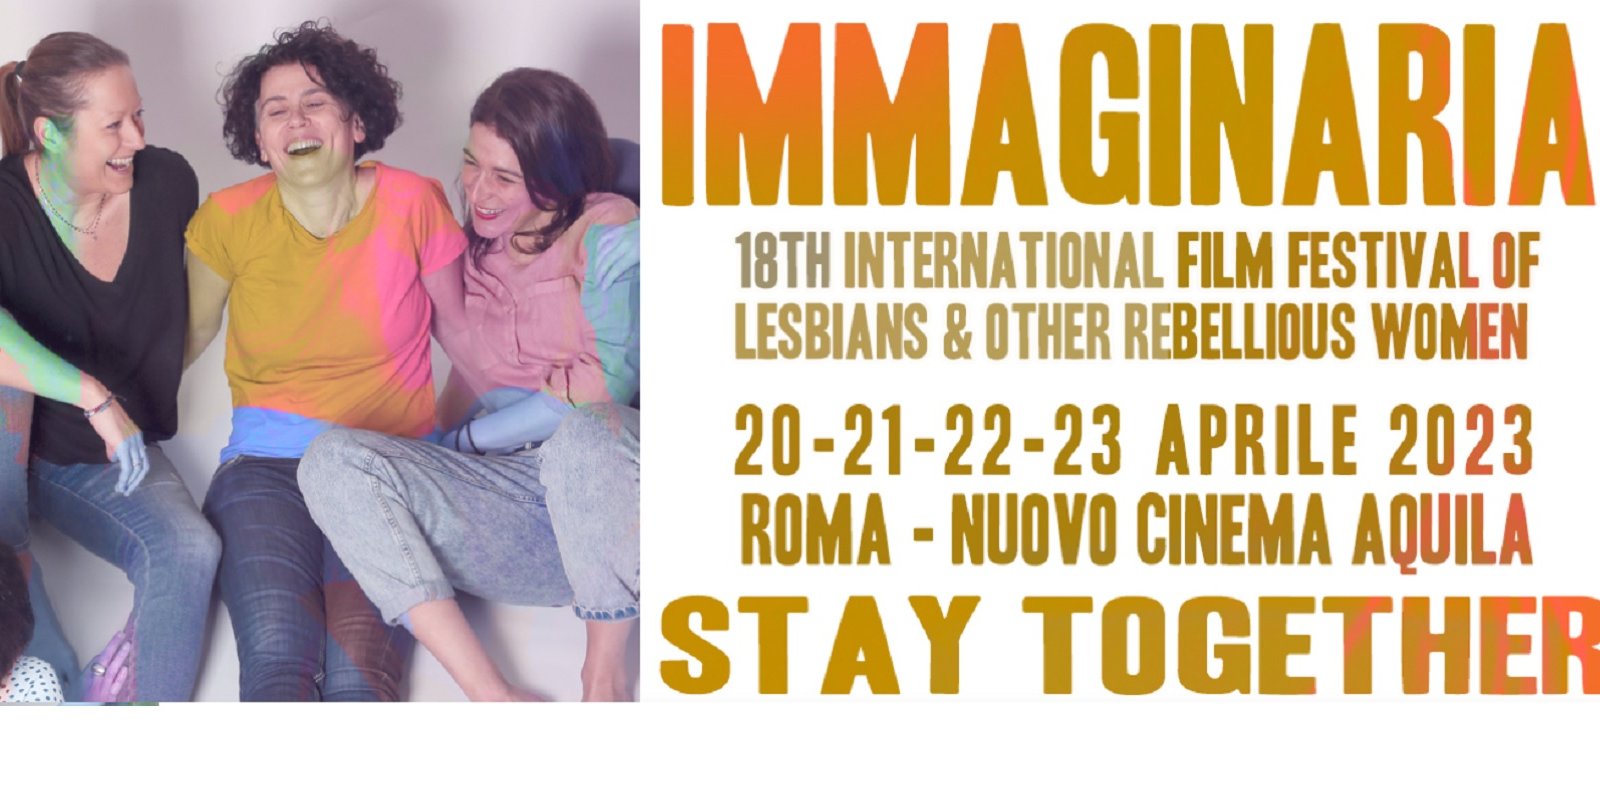 Immaginaria 2023, arriva a Roma l'International Film Festival of Lesbians & Other Rebellious Women